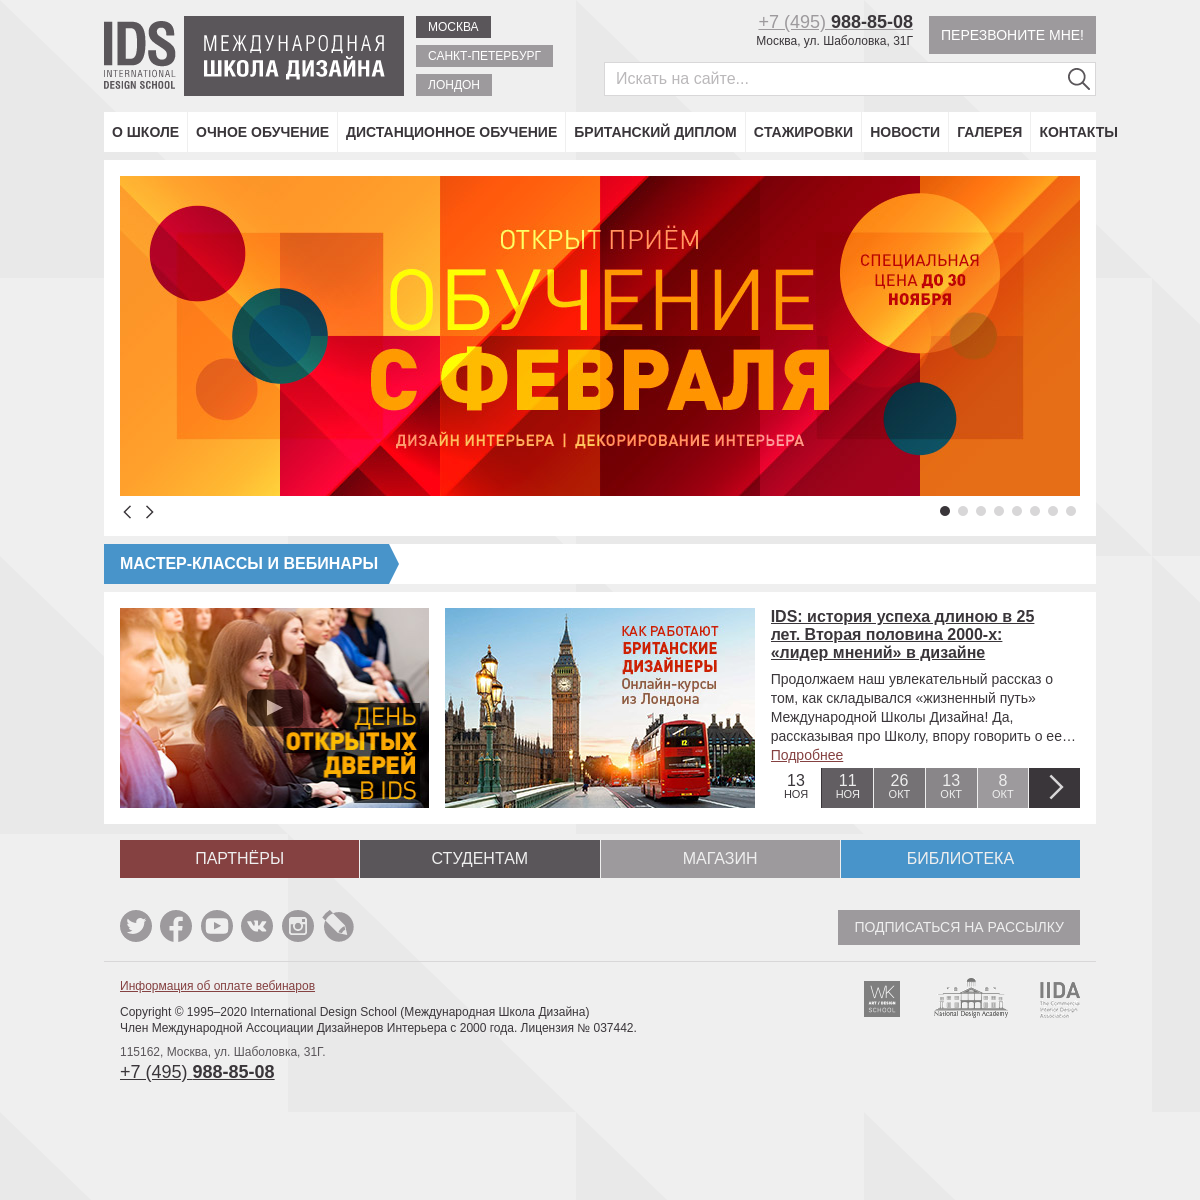 A complete backup of designschool.ru